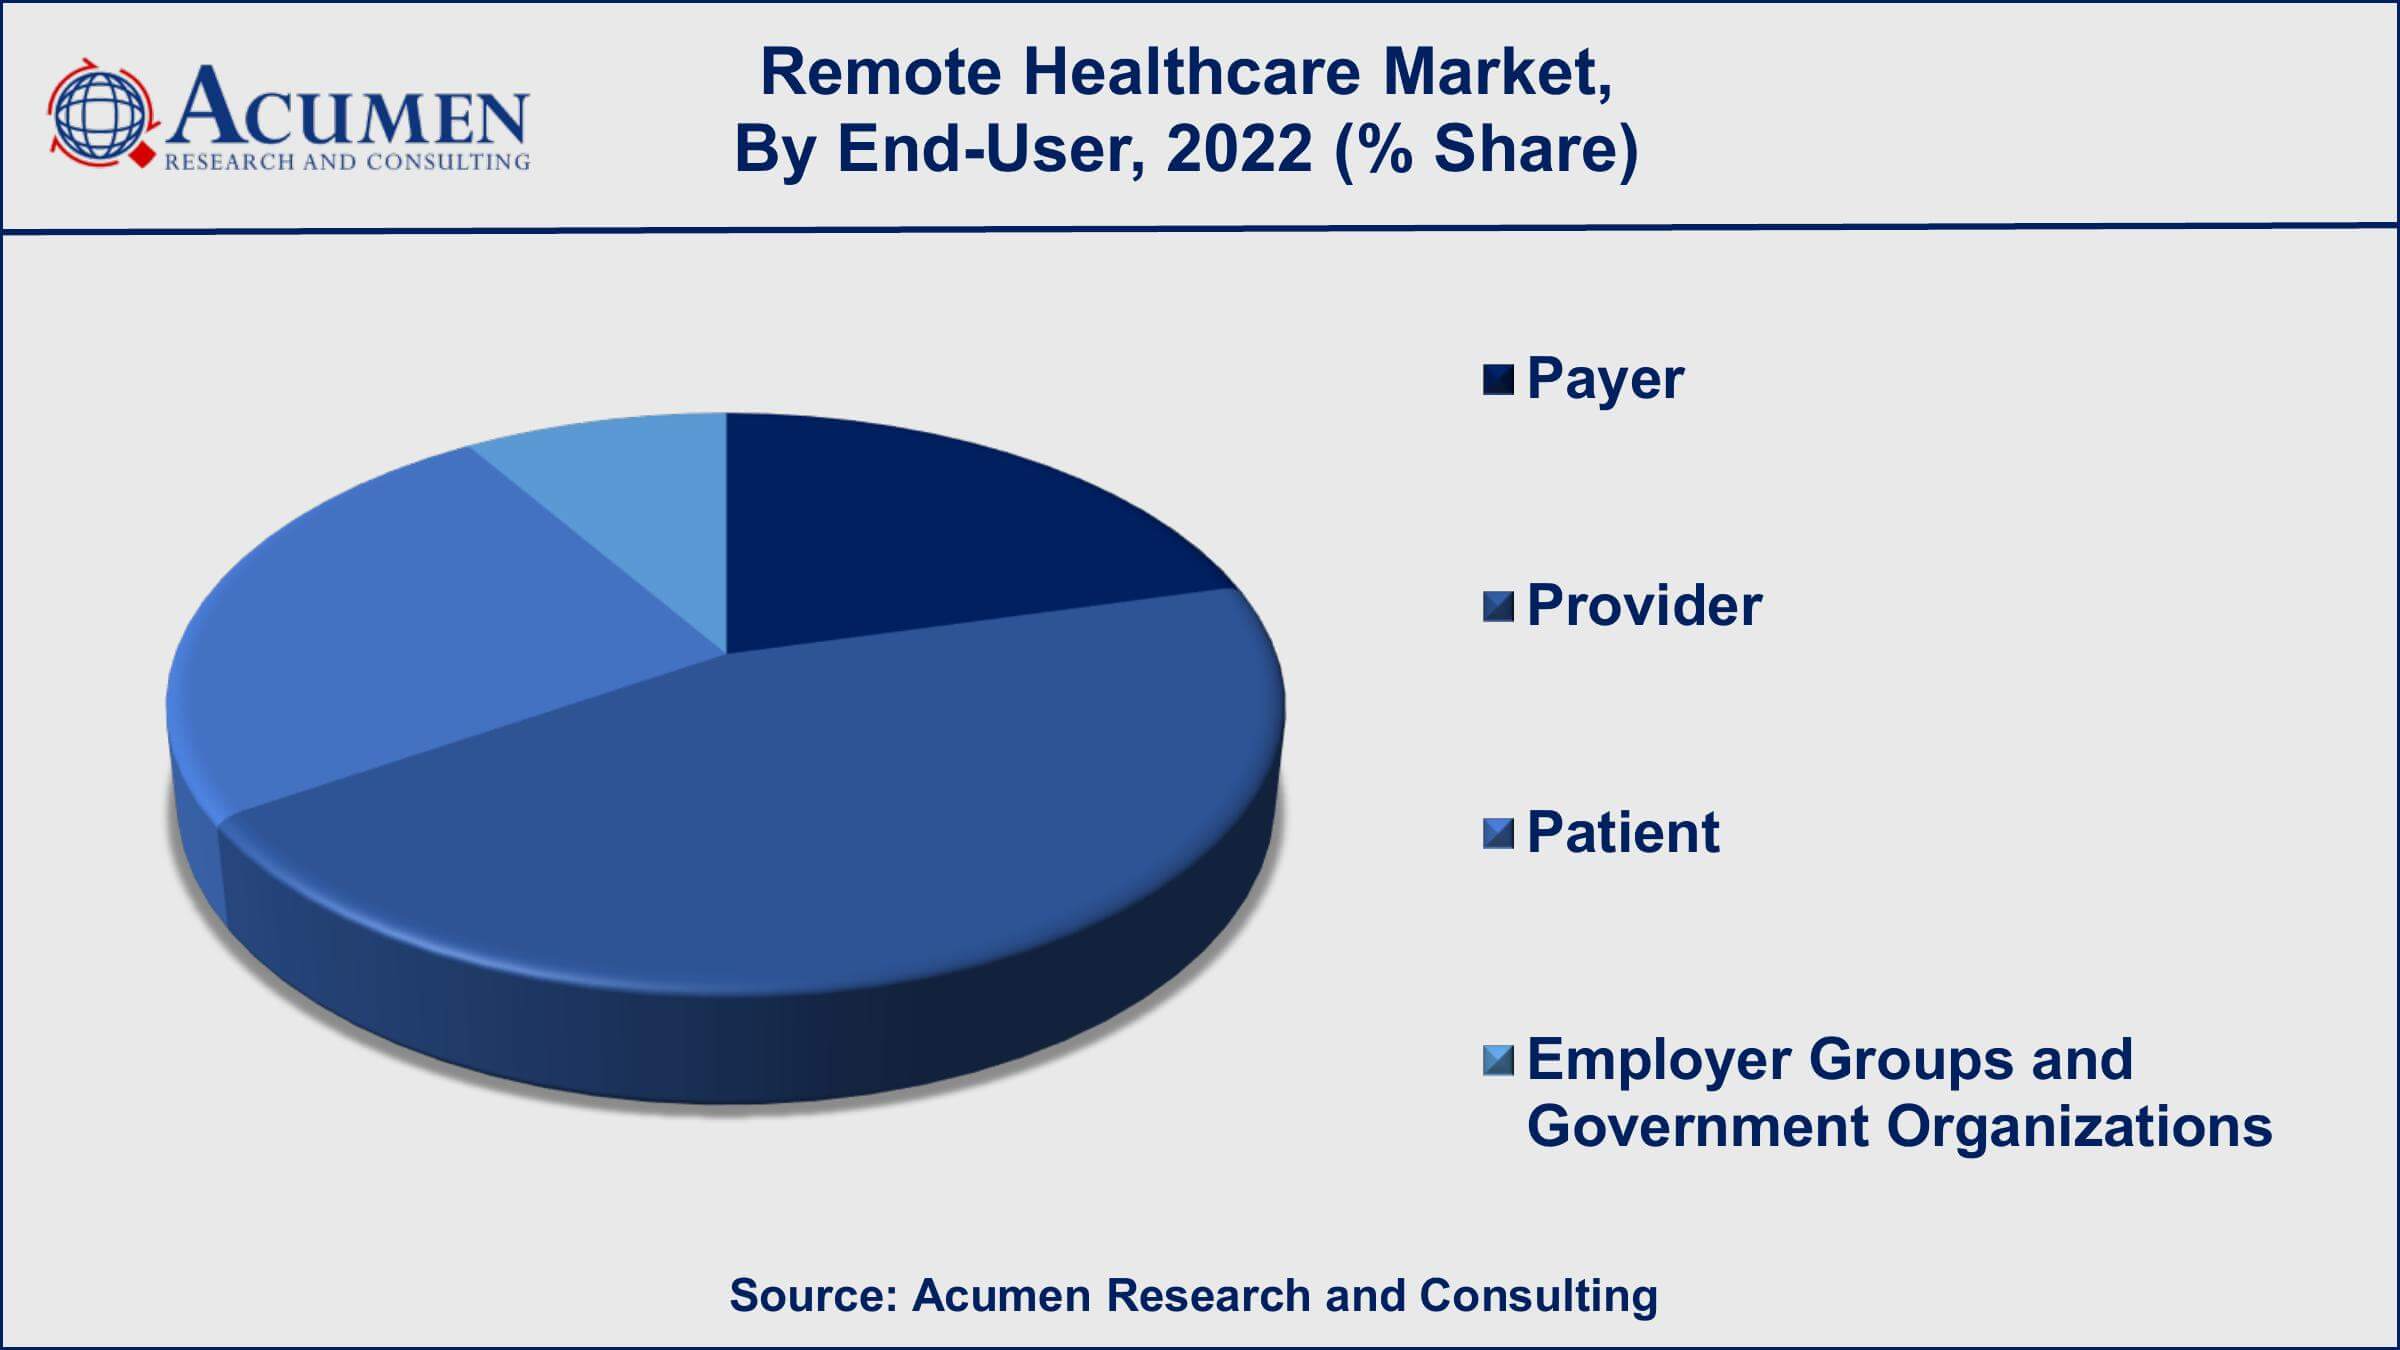 Remote Healthcare Market Drivers